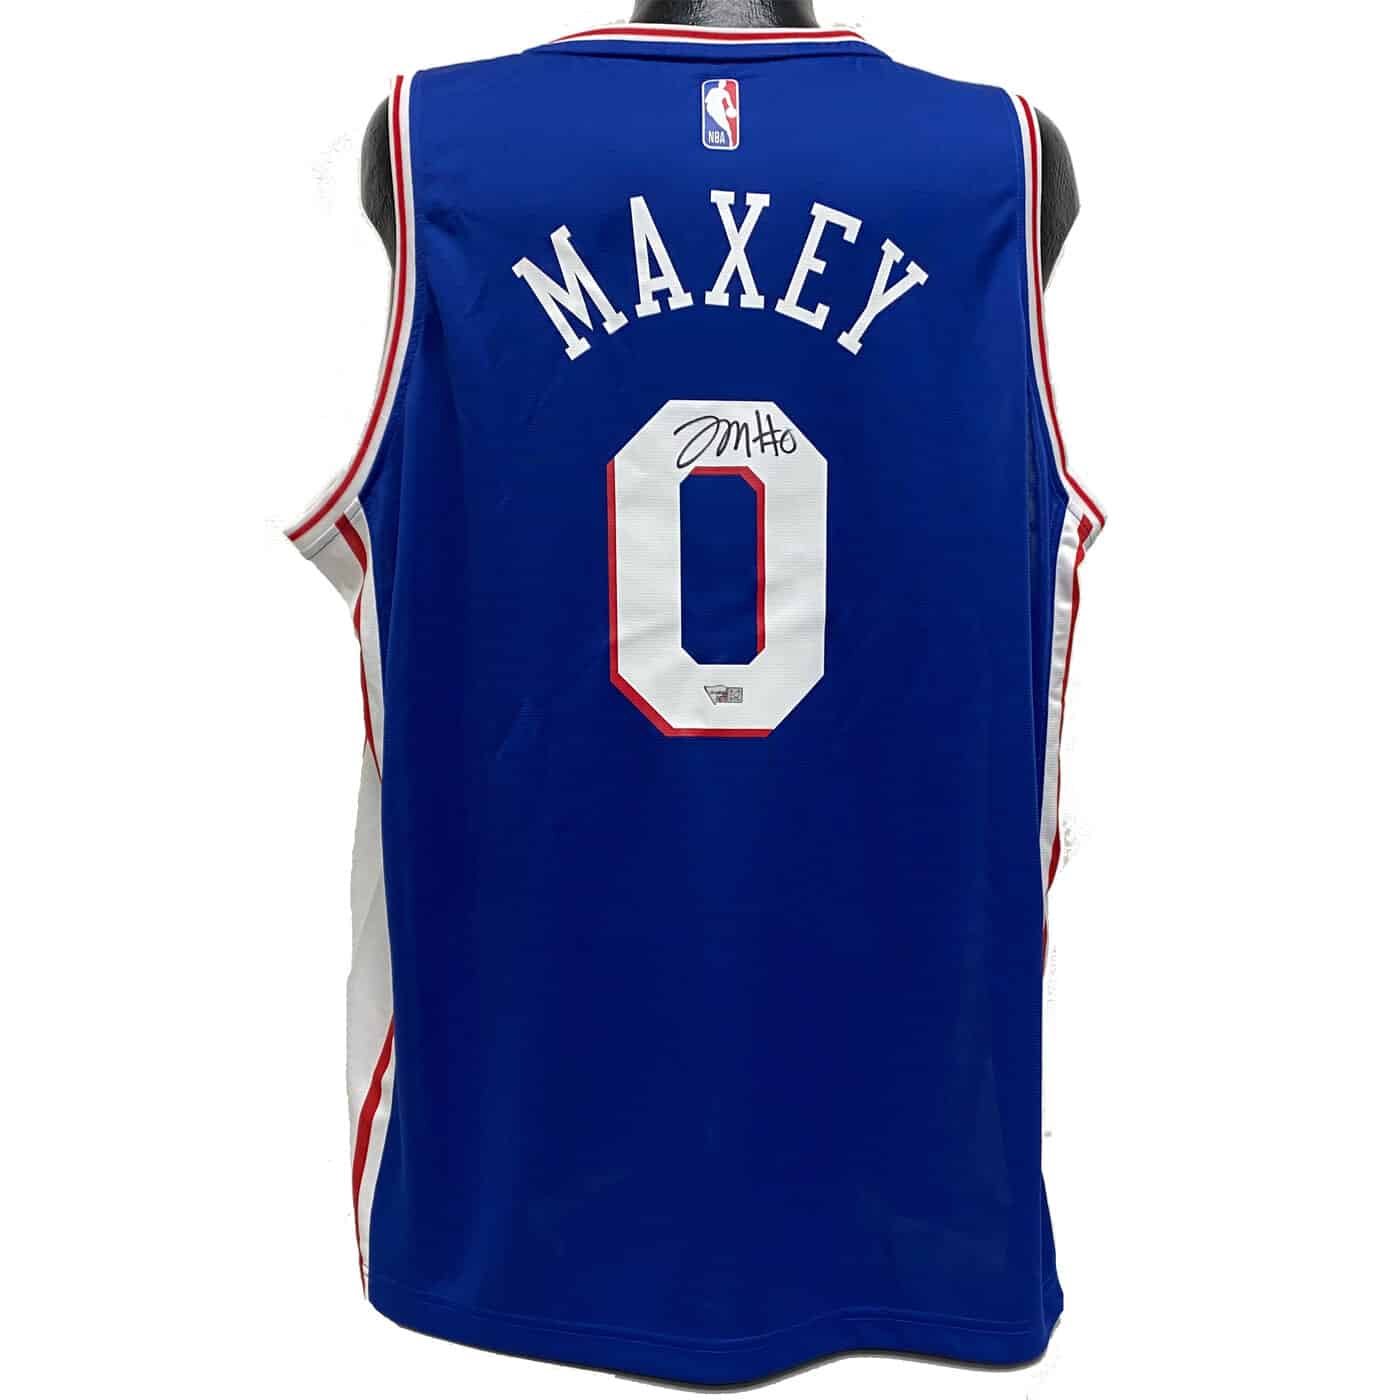 maxey jerseys